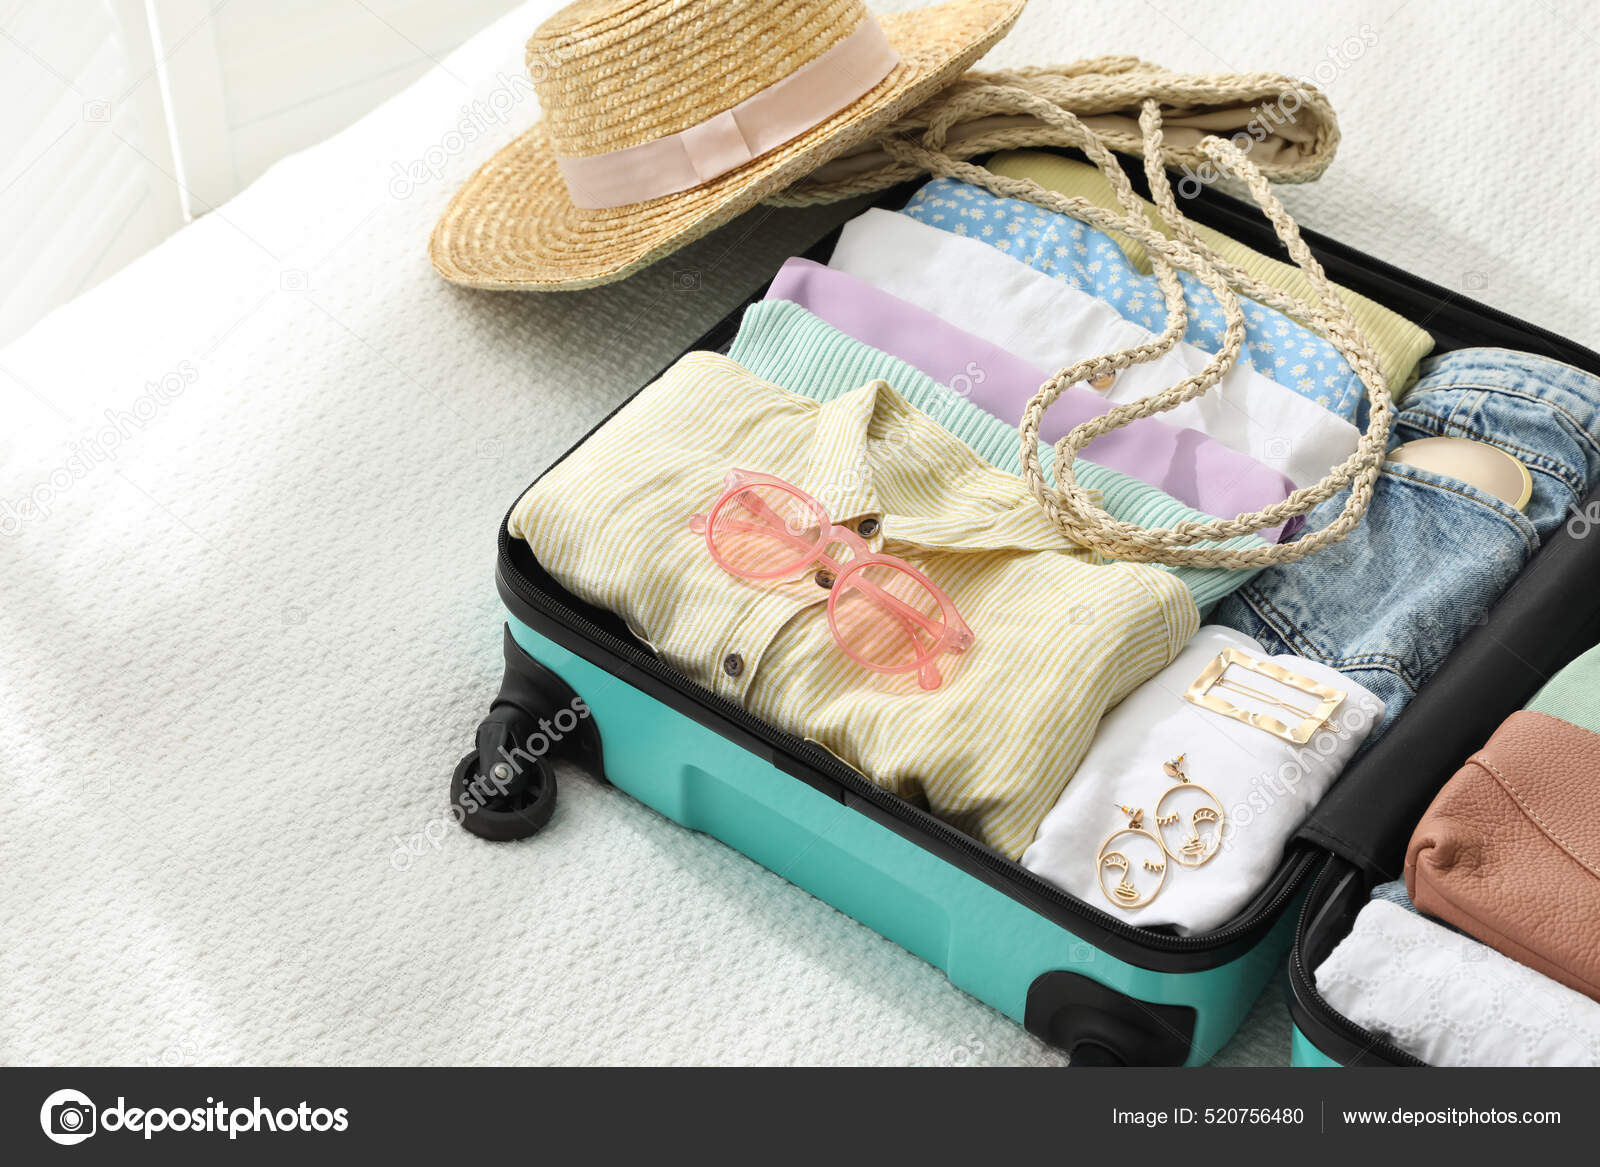 https://st.depositphotos.com/16122460/52075/i/1600/depositphotos_520756480-stock-photo-open-suitcase-packed-trip-accessories.jpg